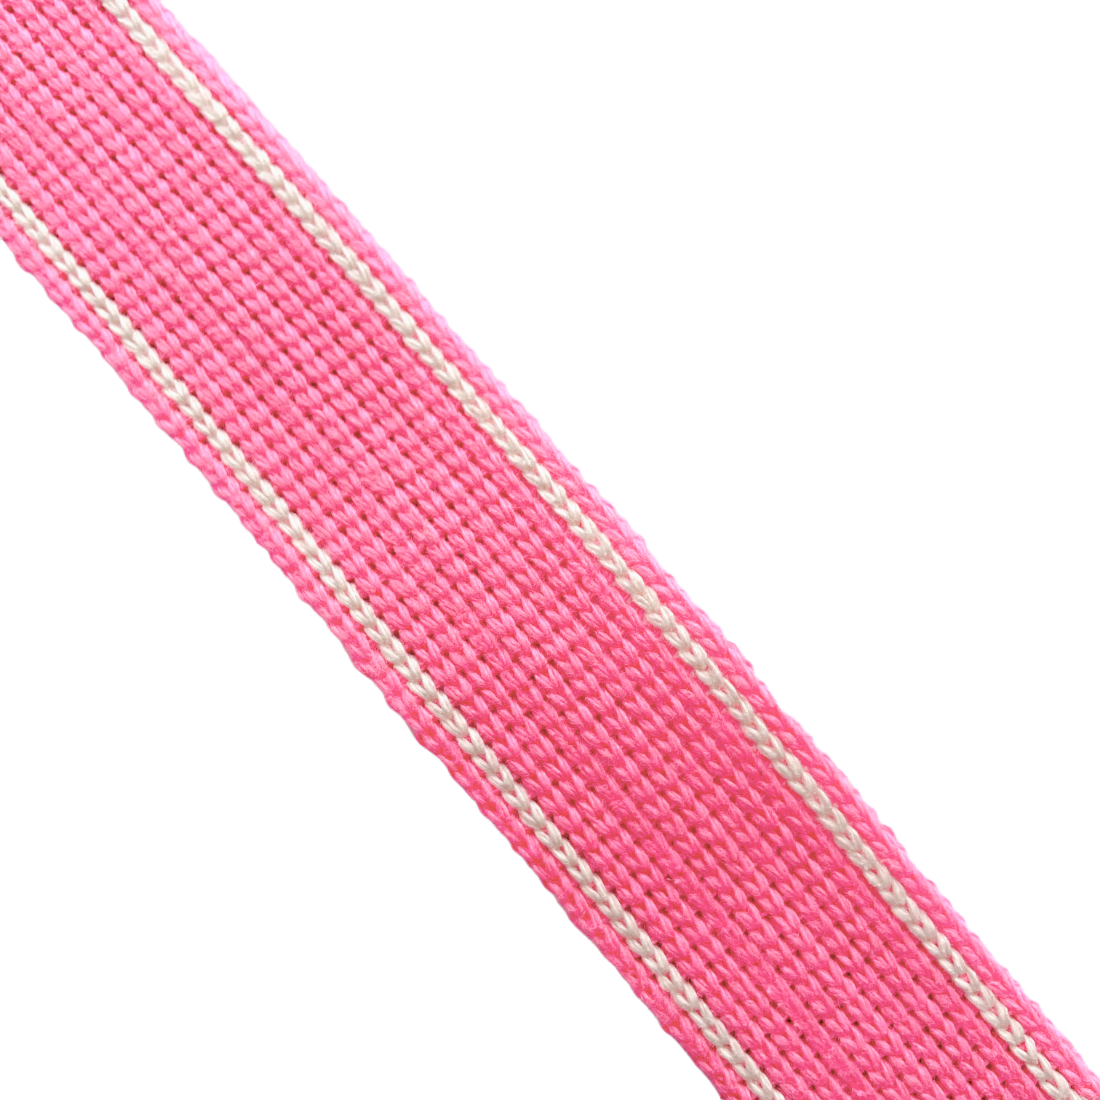 Bag Webbing - 30mm Cotton Blend with Ecru Stripe in Pink - Quilt Yarn ...